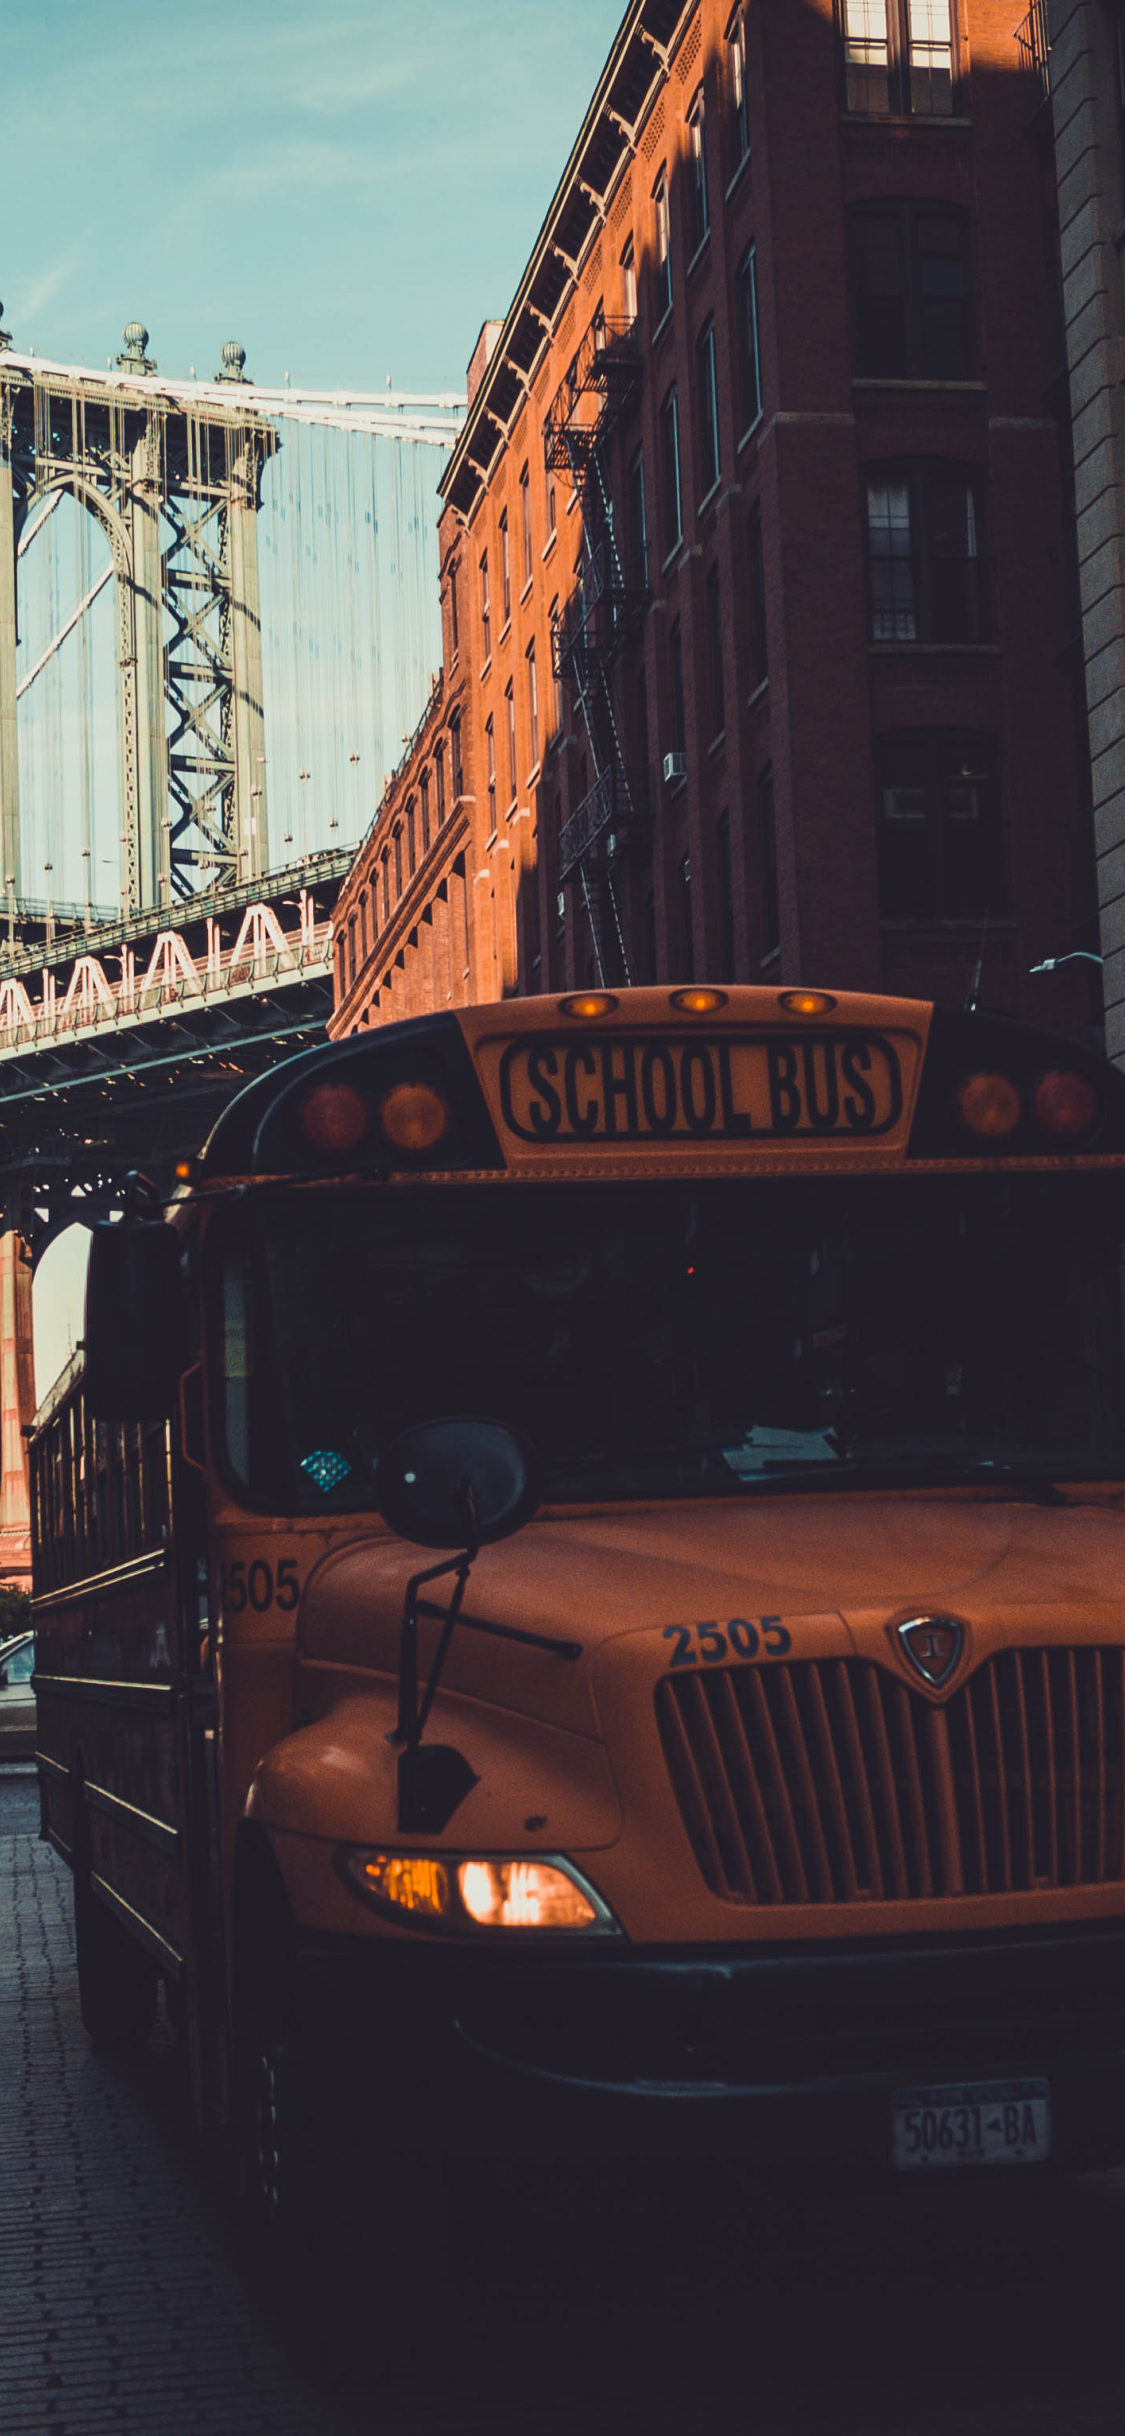 1125x2436 Download school bus, manhattan bridge, city new york wallpaper, iphone x, hd image, background, 690